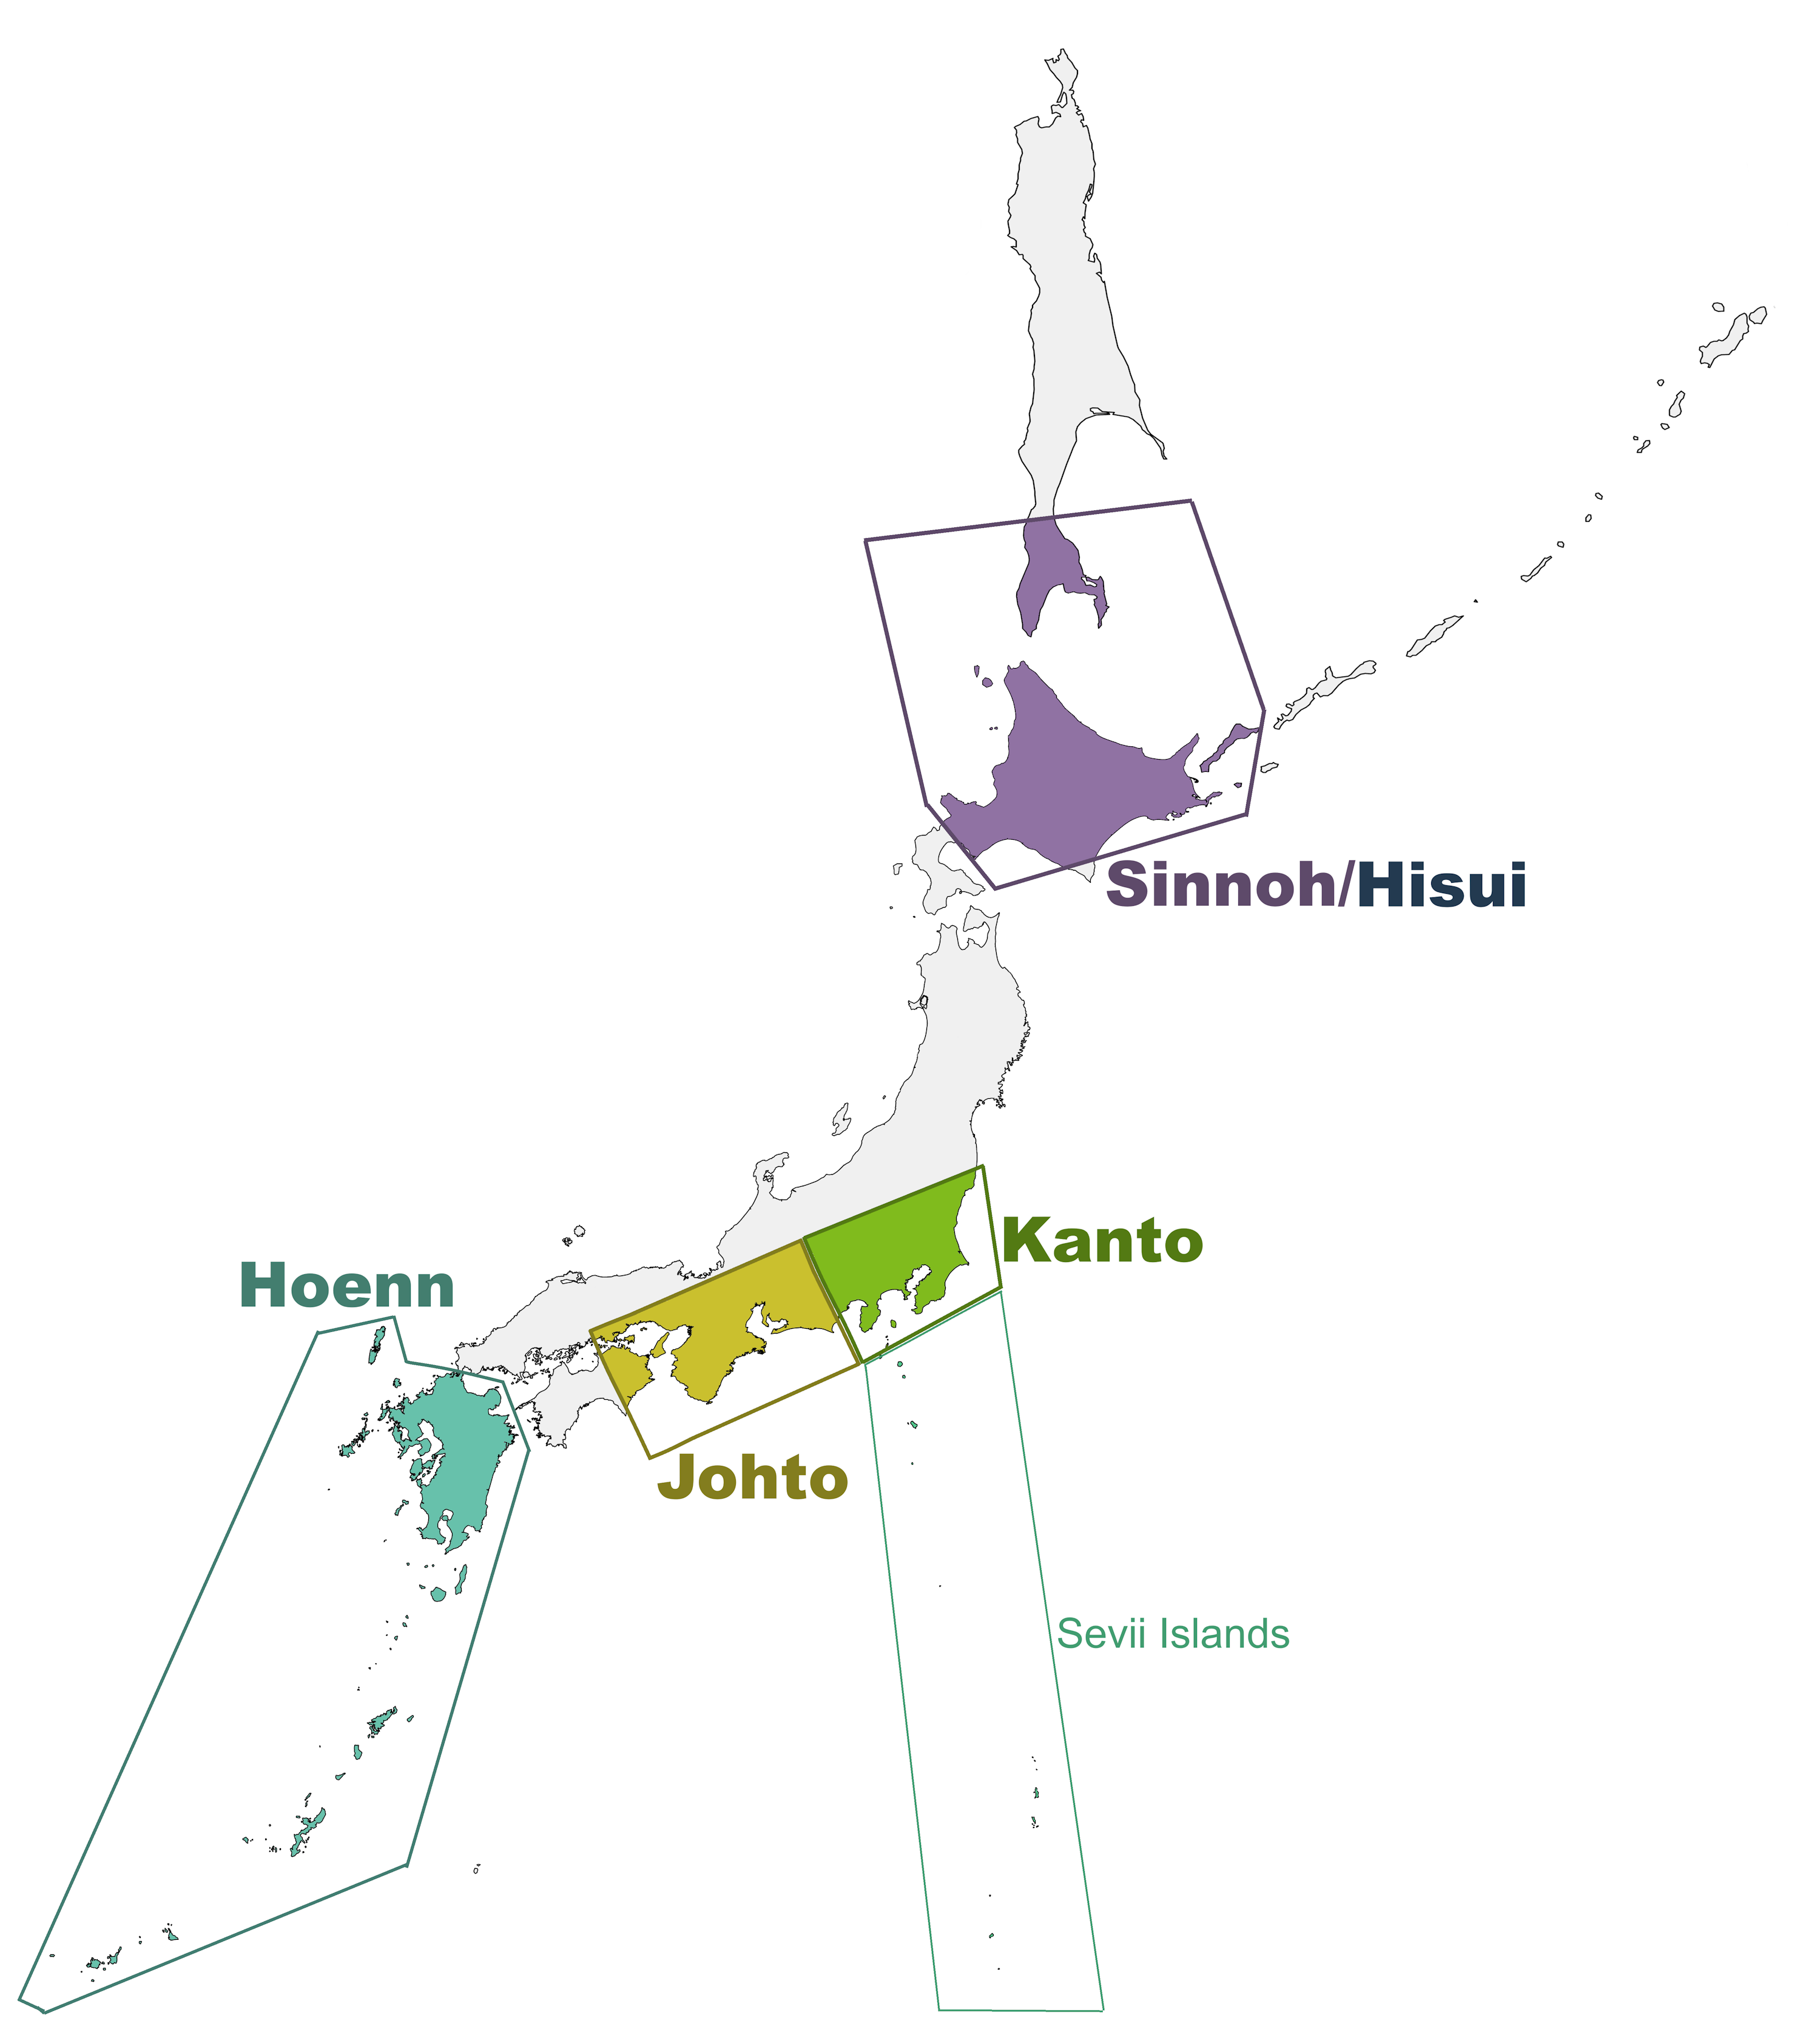 Pokémon regions in relation to Japan